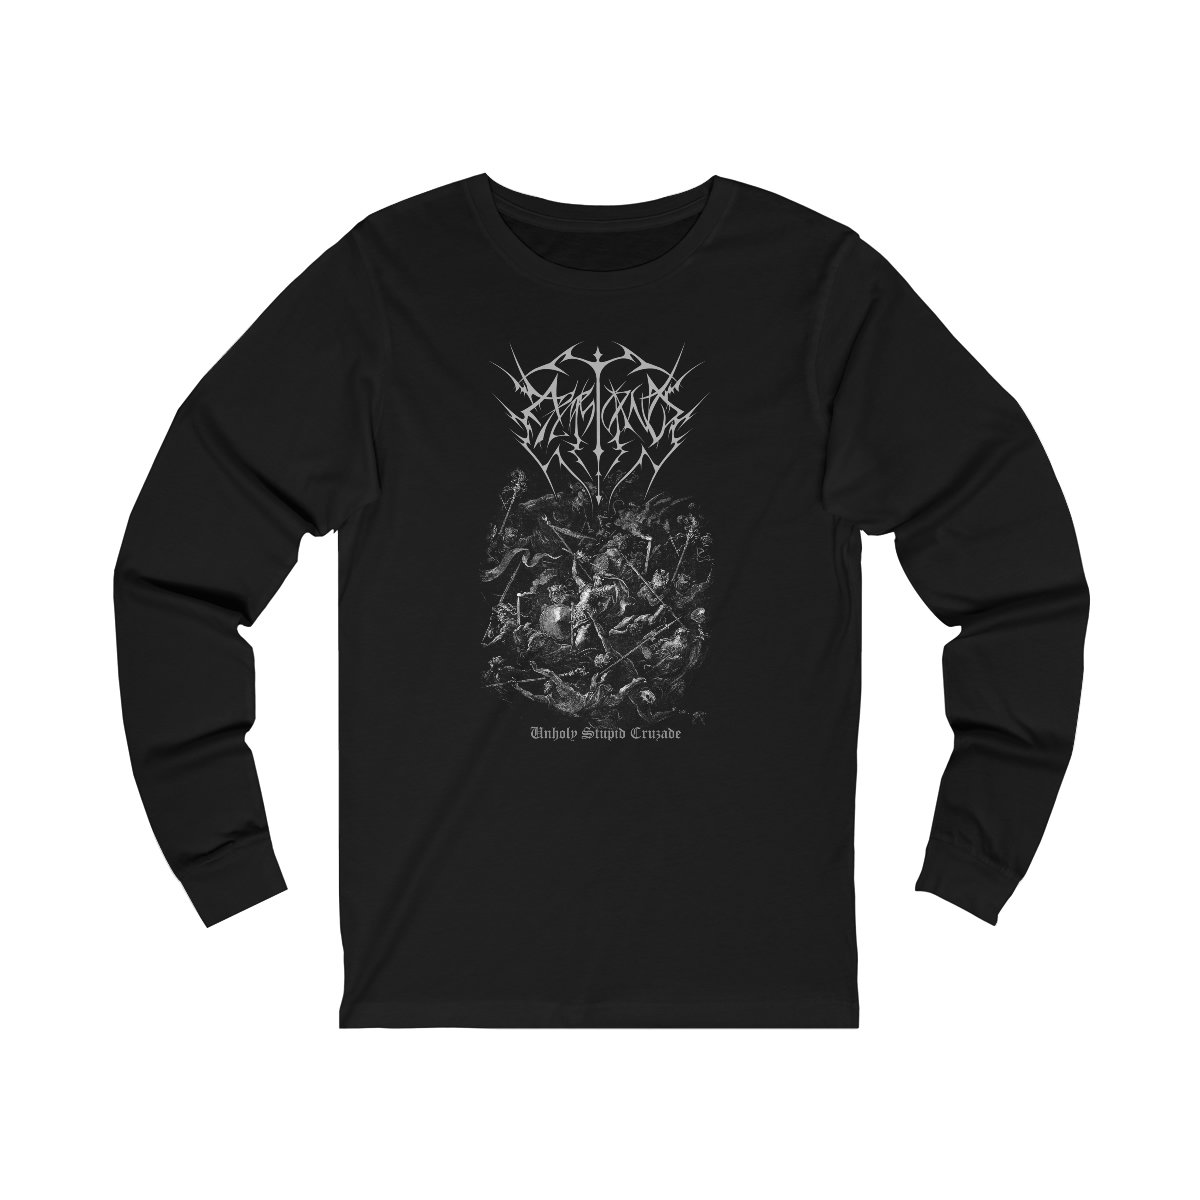 Trastorno – Unholy Stupid Crusade Long Sleeve Tshirt 3501D